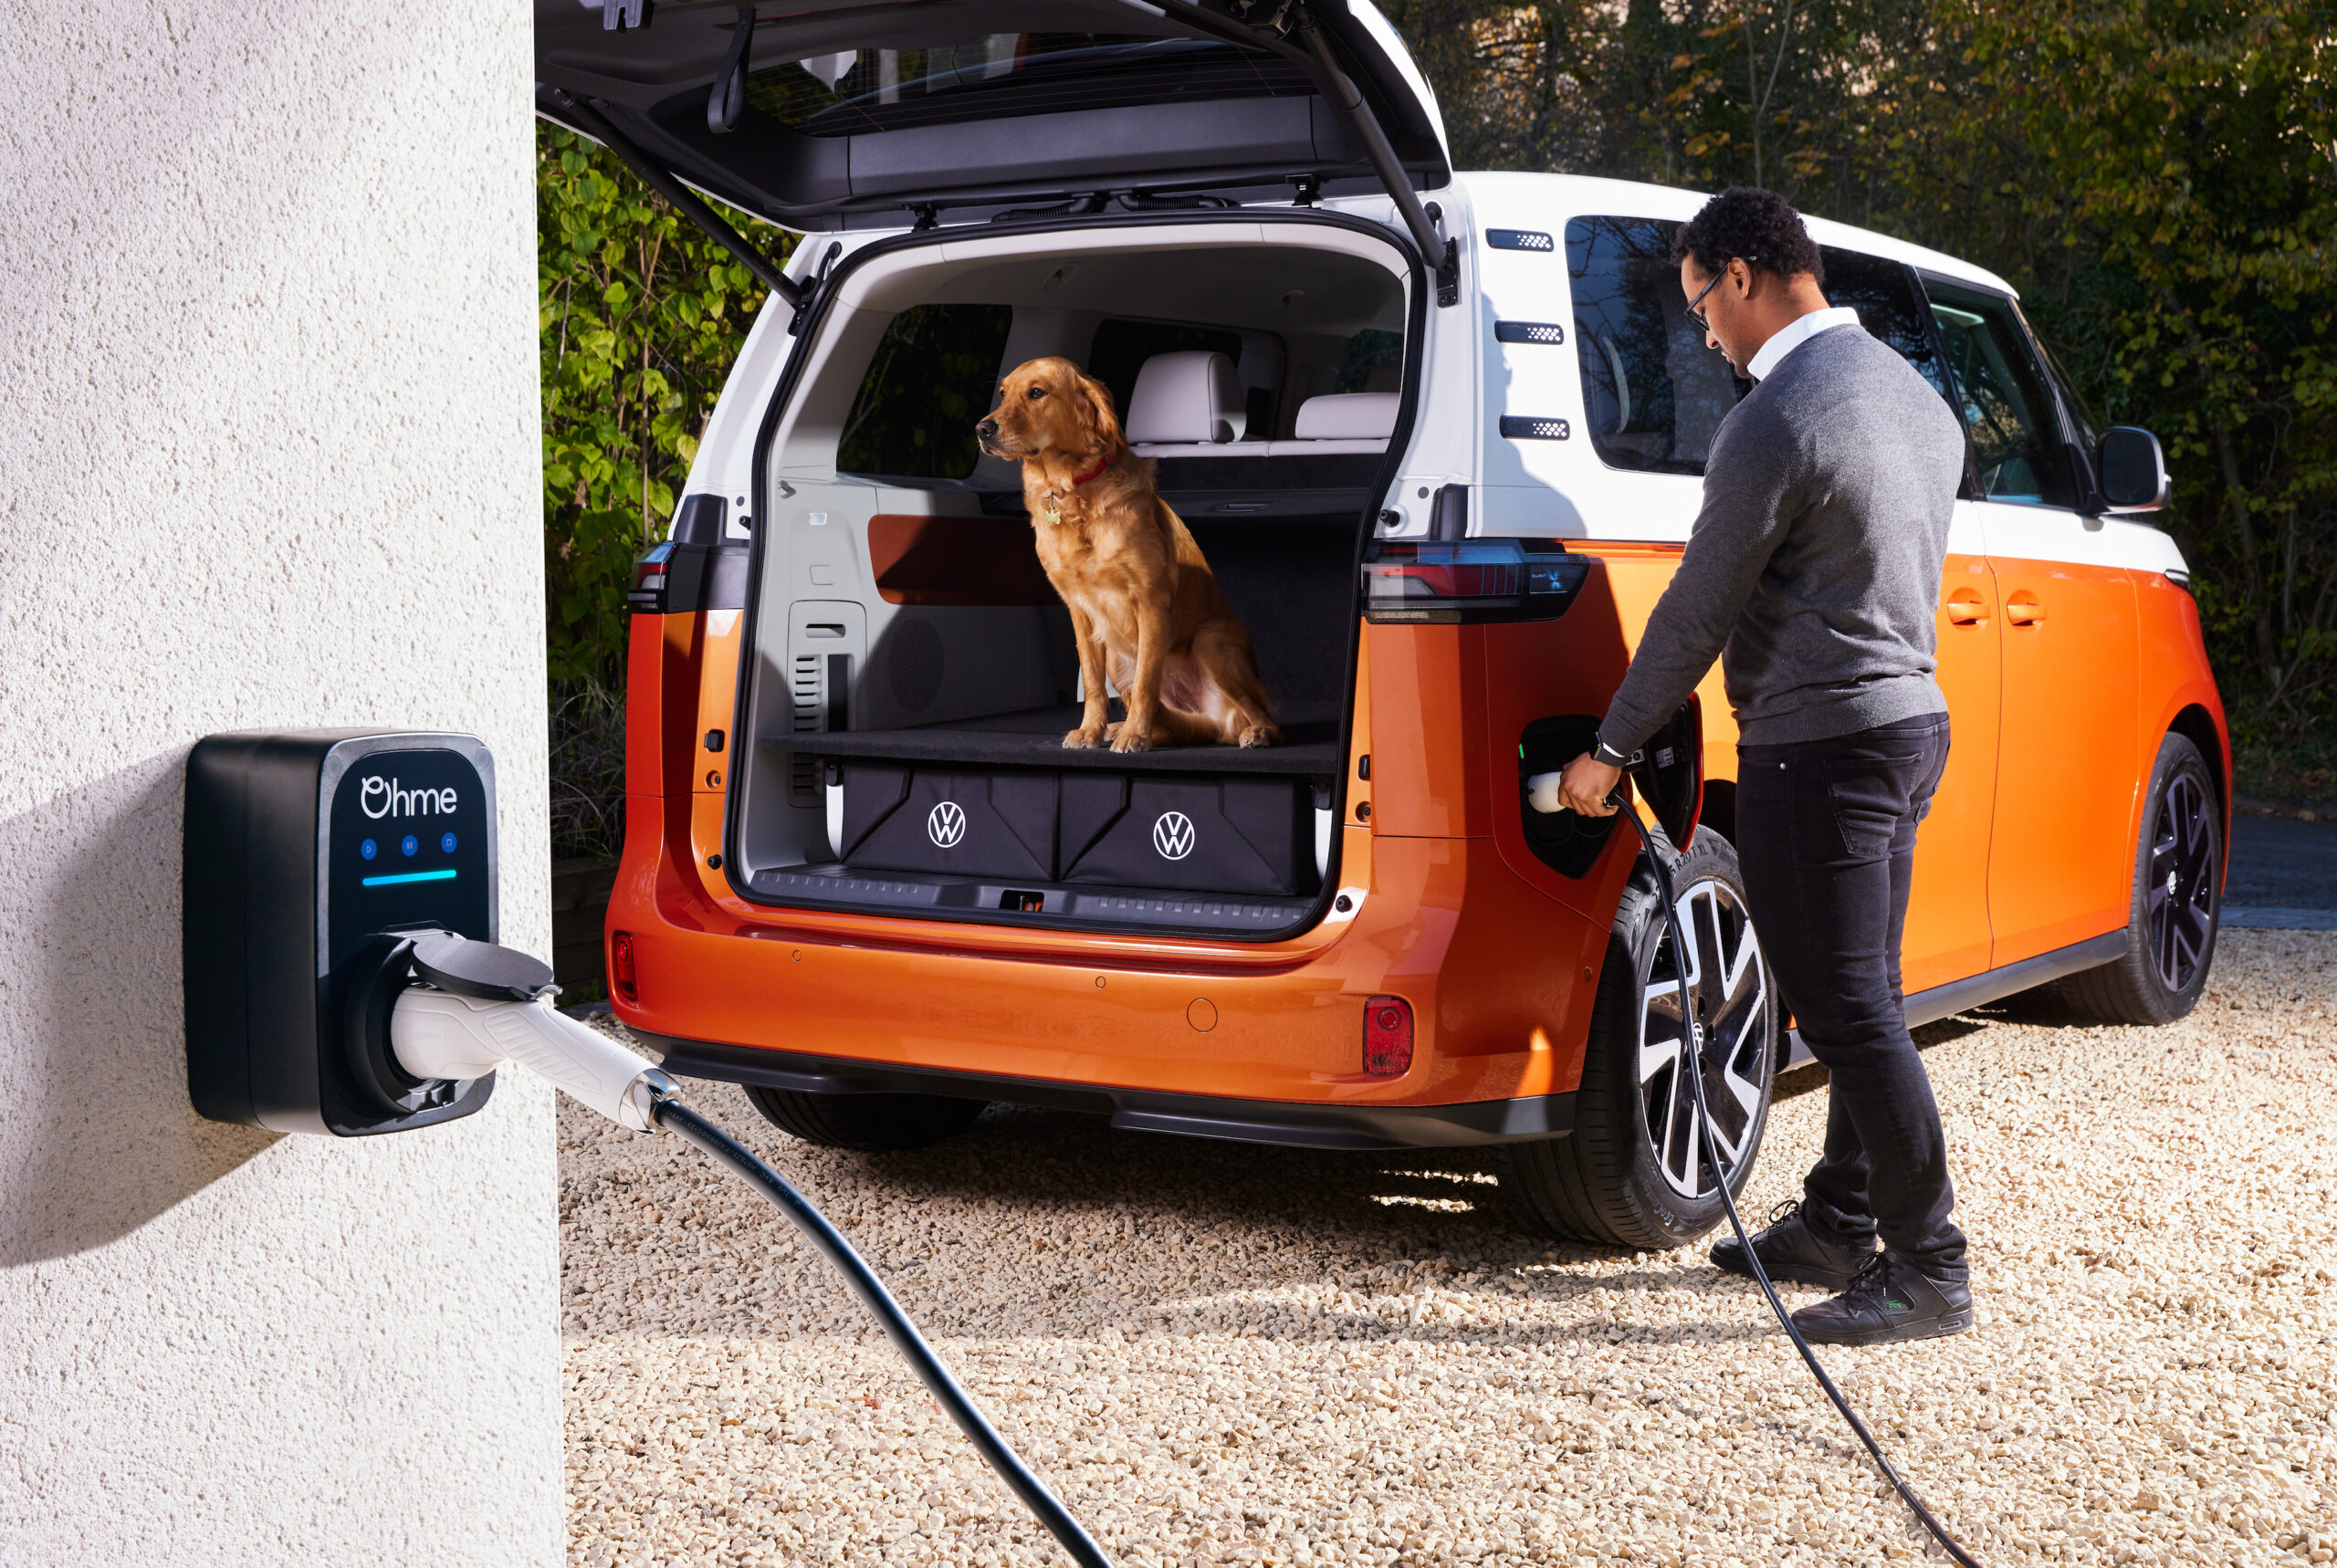 Ohme ePod charging VW ID Buzz with dog